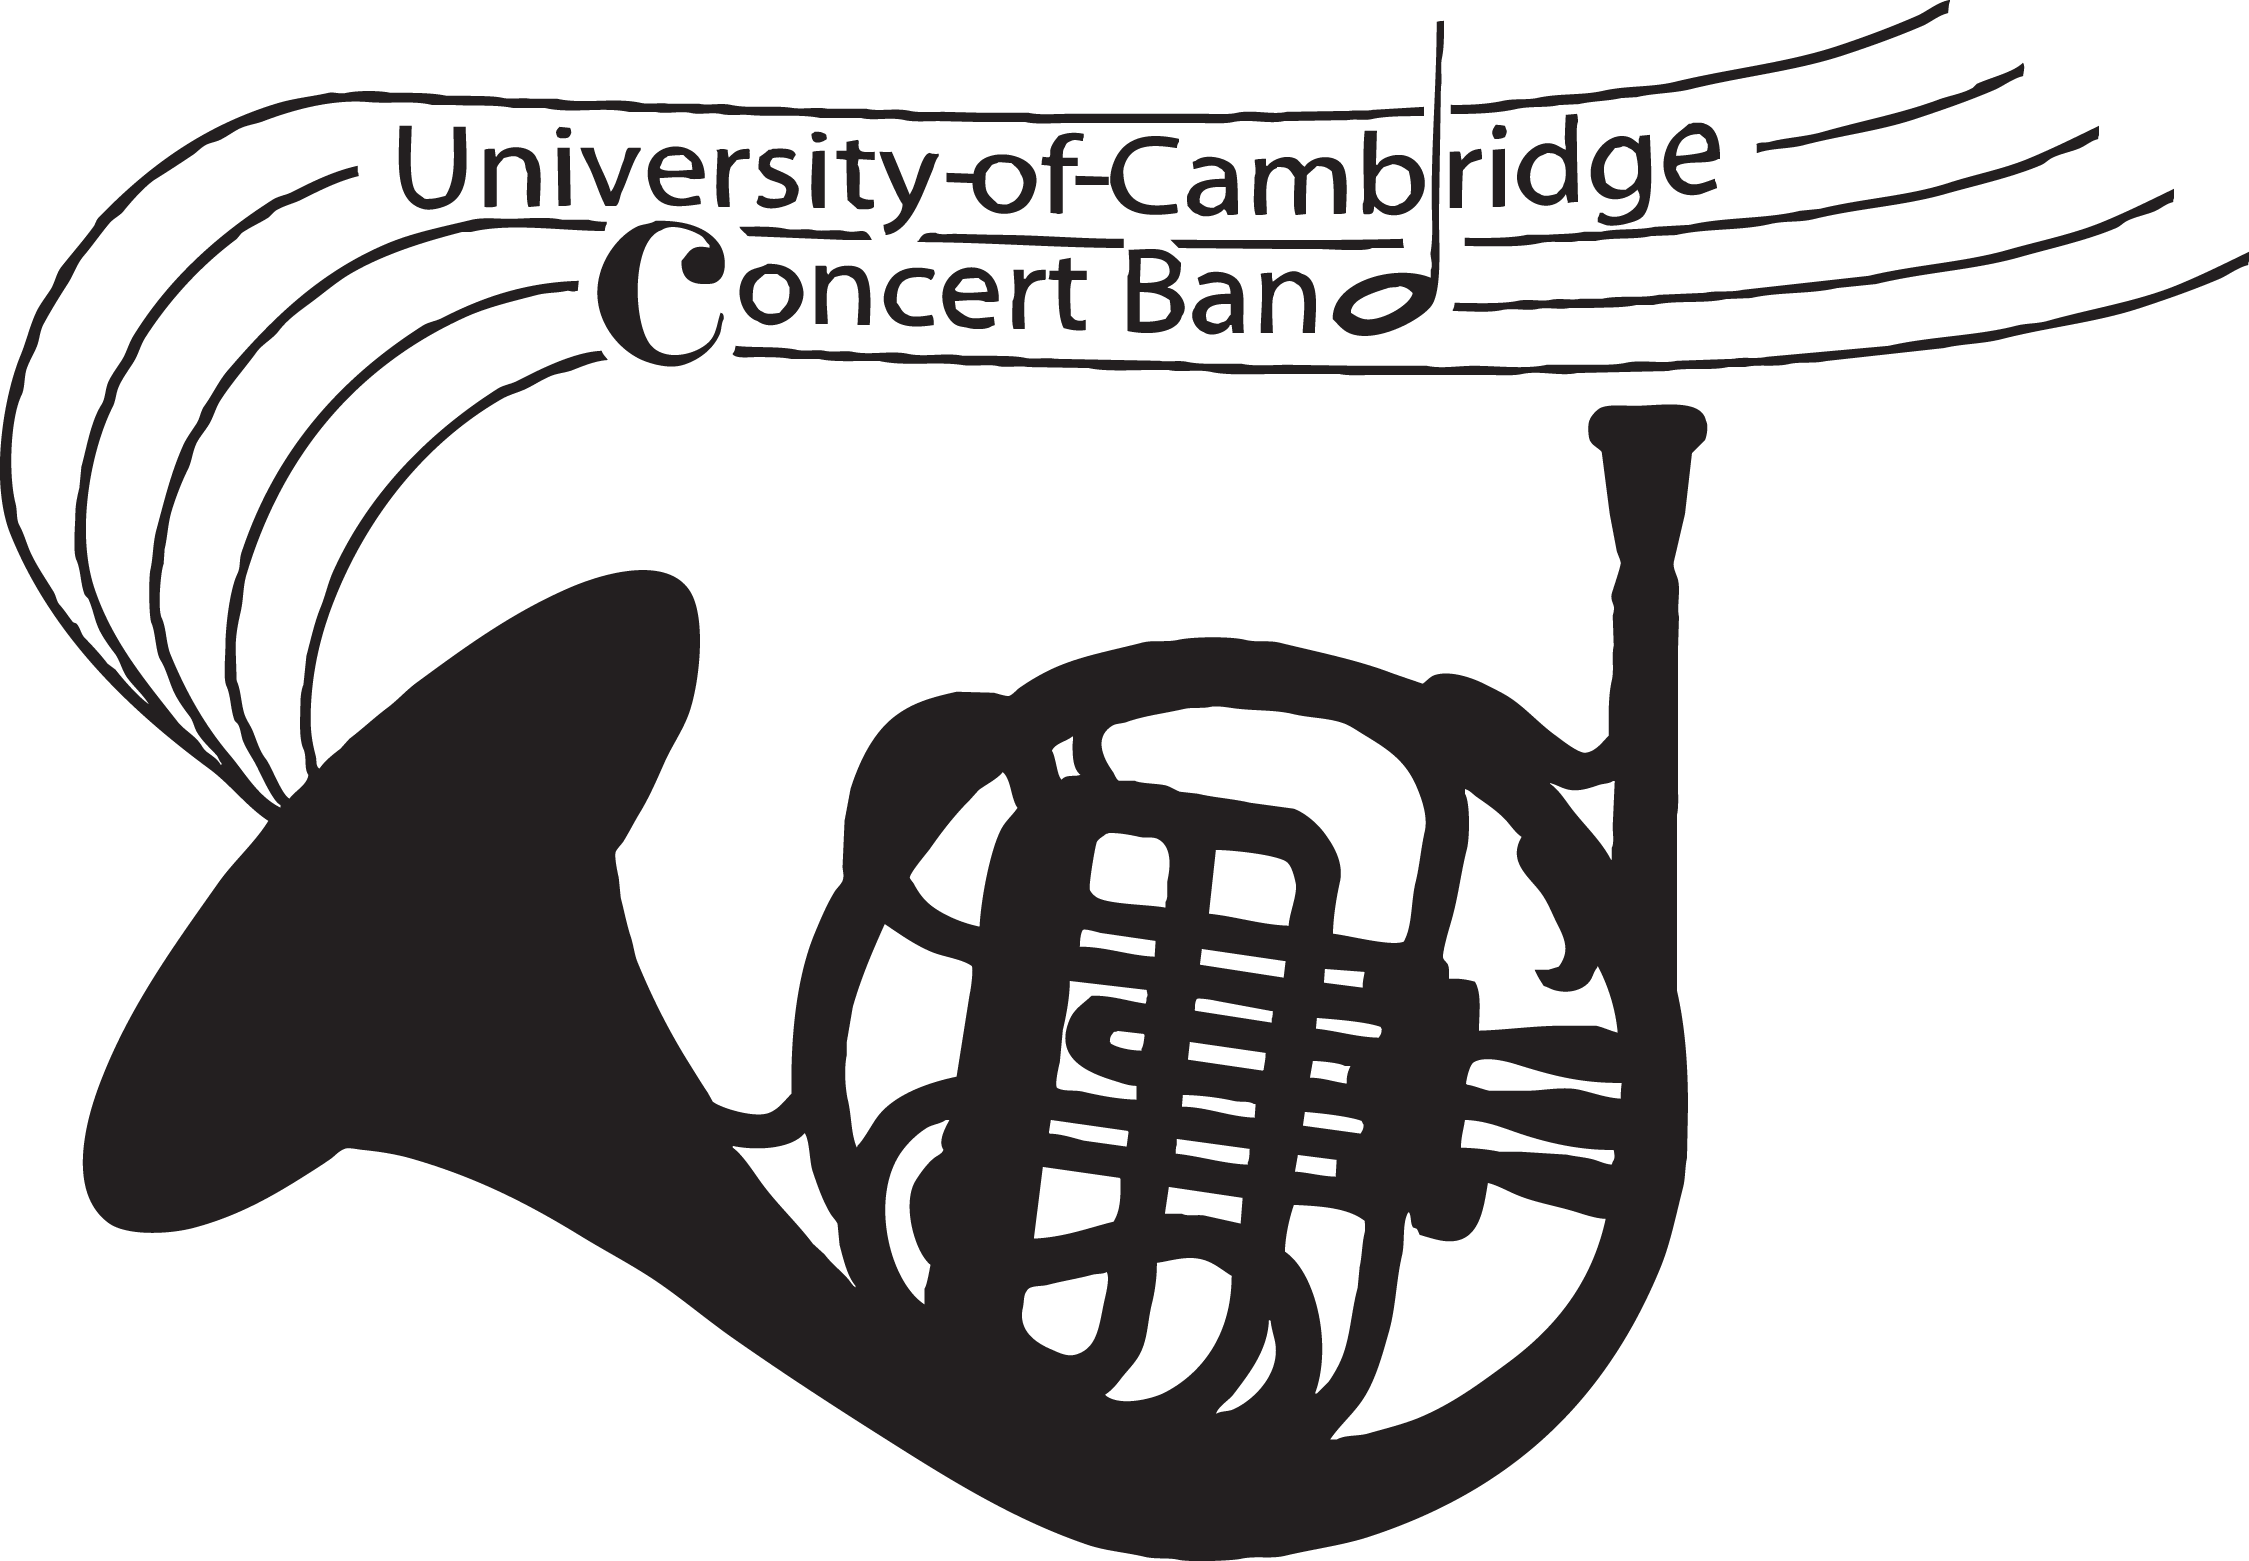 University of Cambridge Concert Band